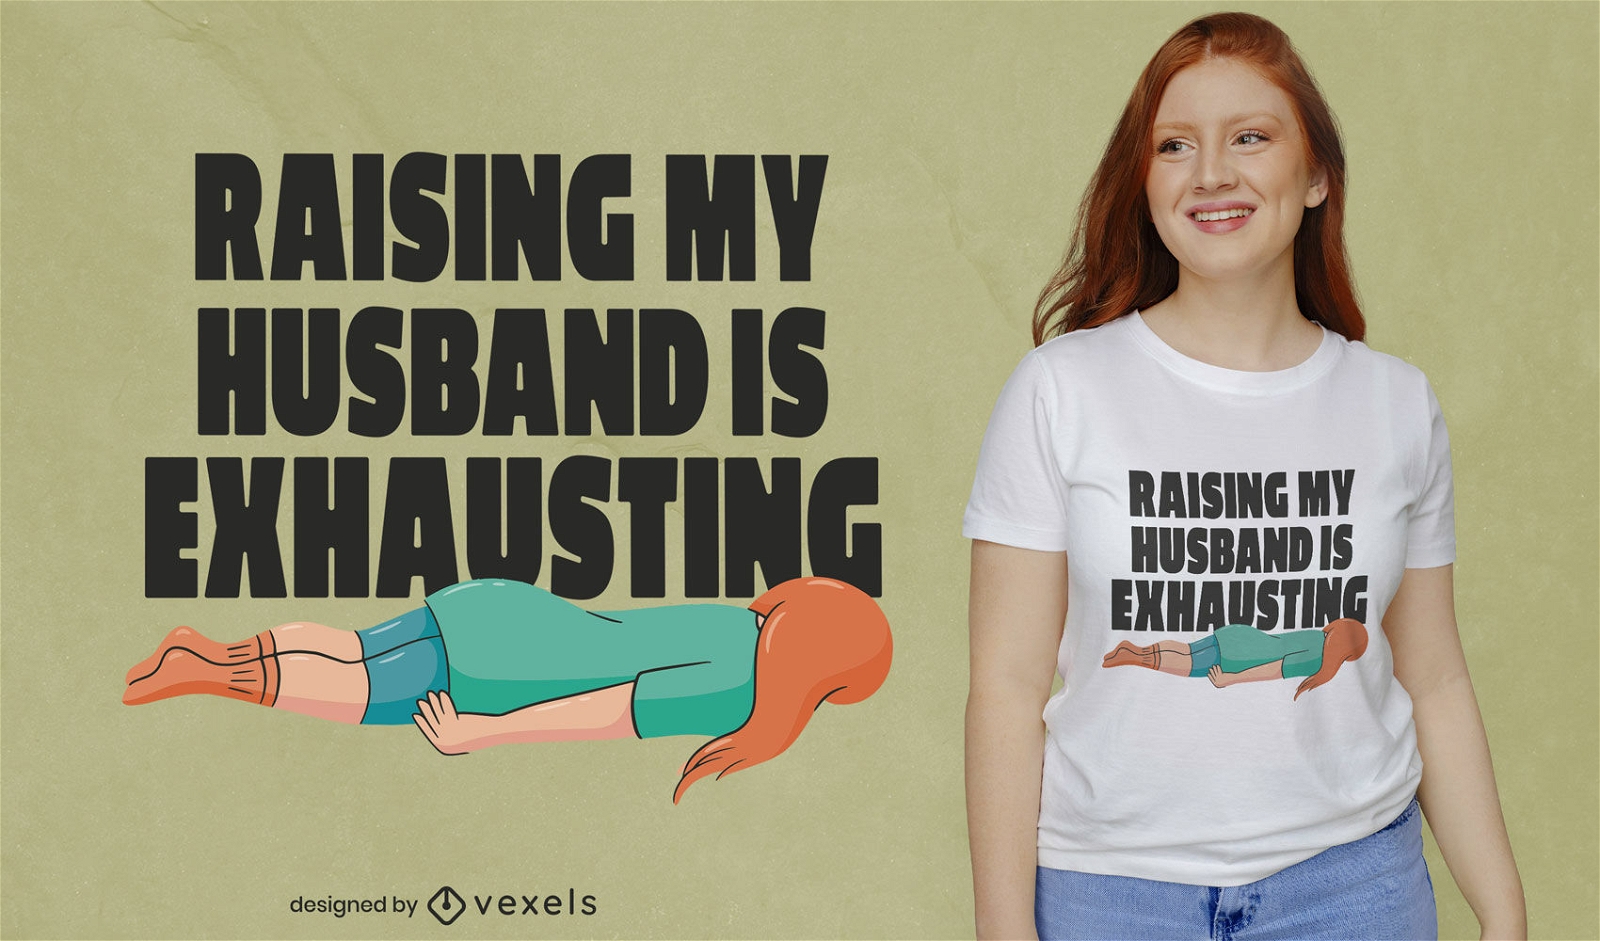 Lustiges Zitat-T-Shirt Design der ersch?pften Frau